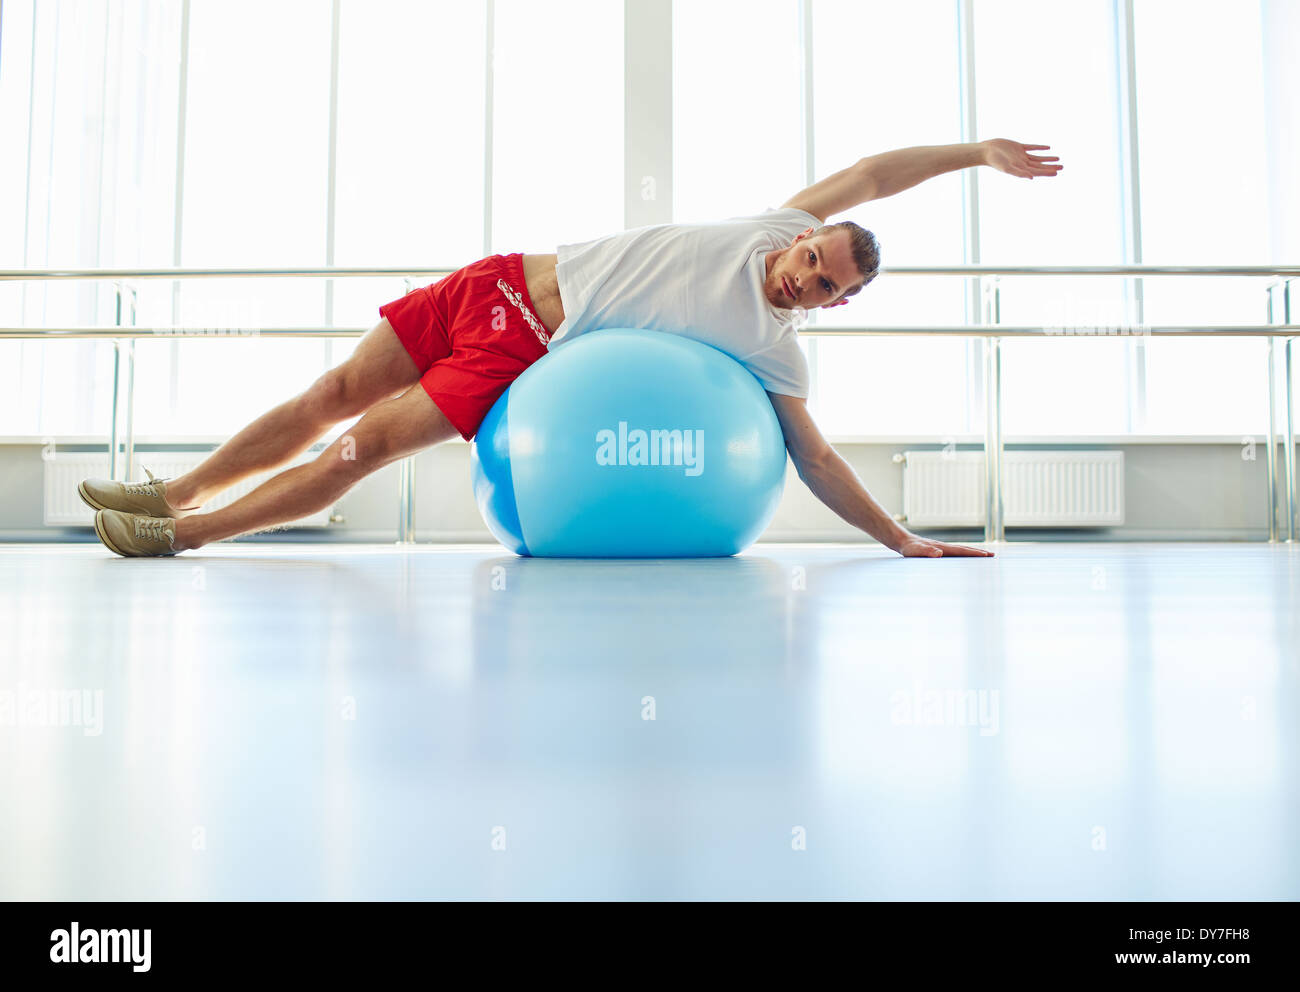 Gym Ball : Ballon de gymnastique, fitness et streching de